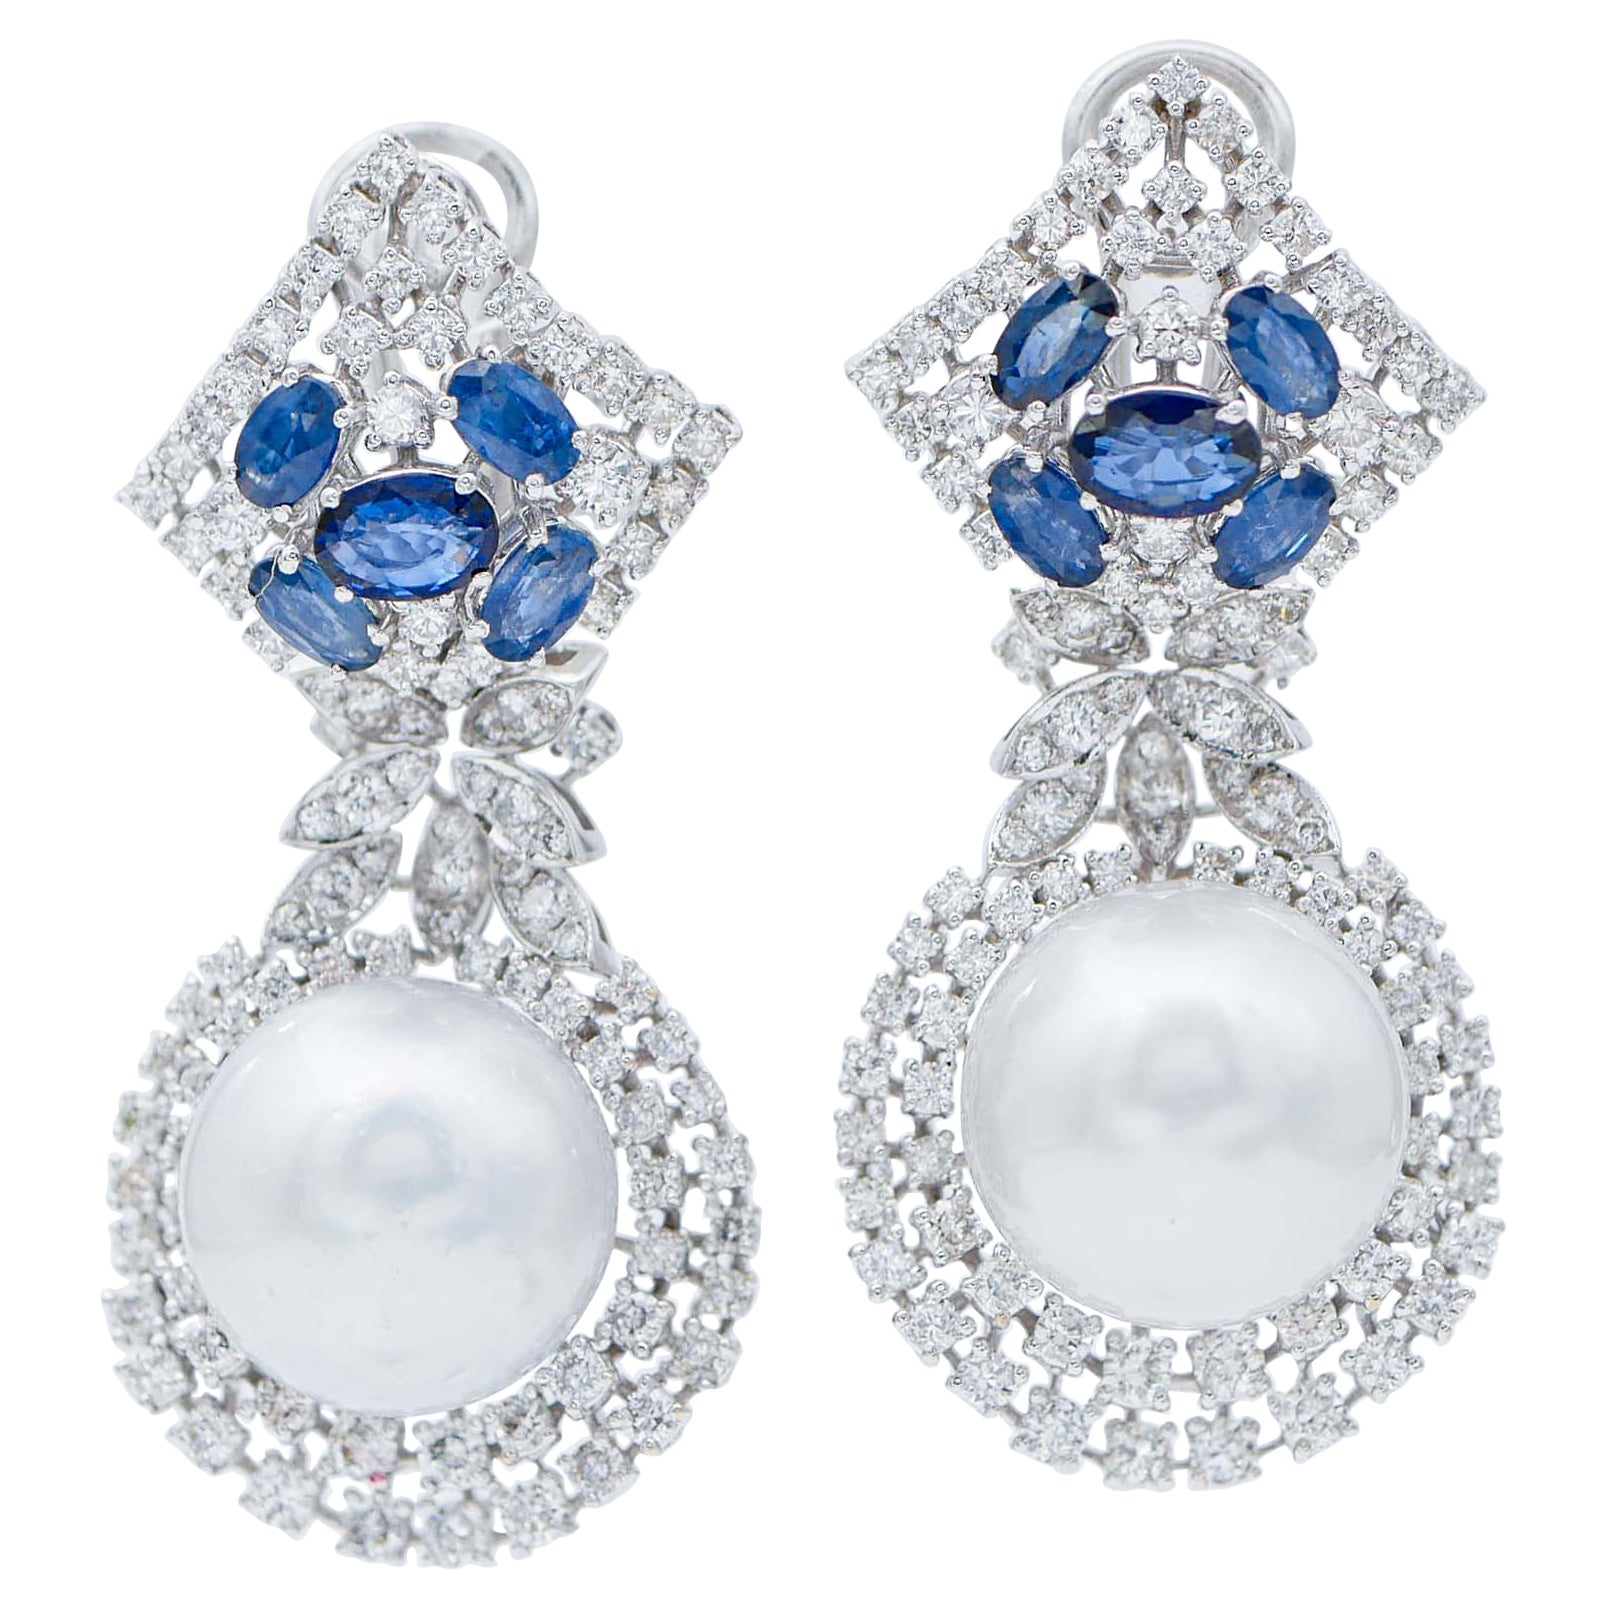 South-Sea Pearls, Sapphires, Diamonds, 18 Karat White Gold Earrings For Sale